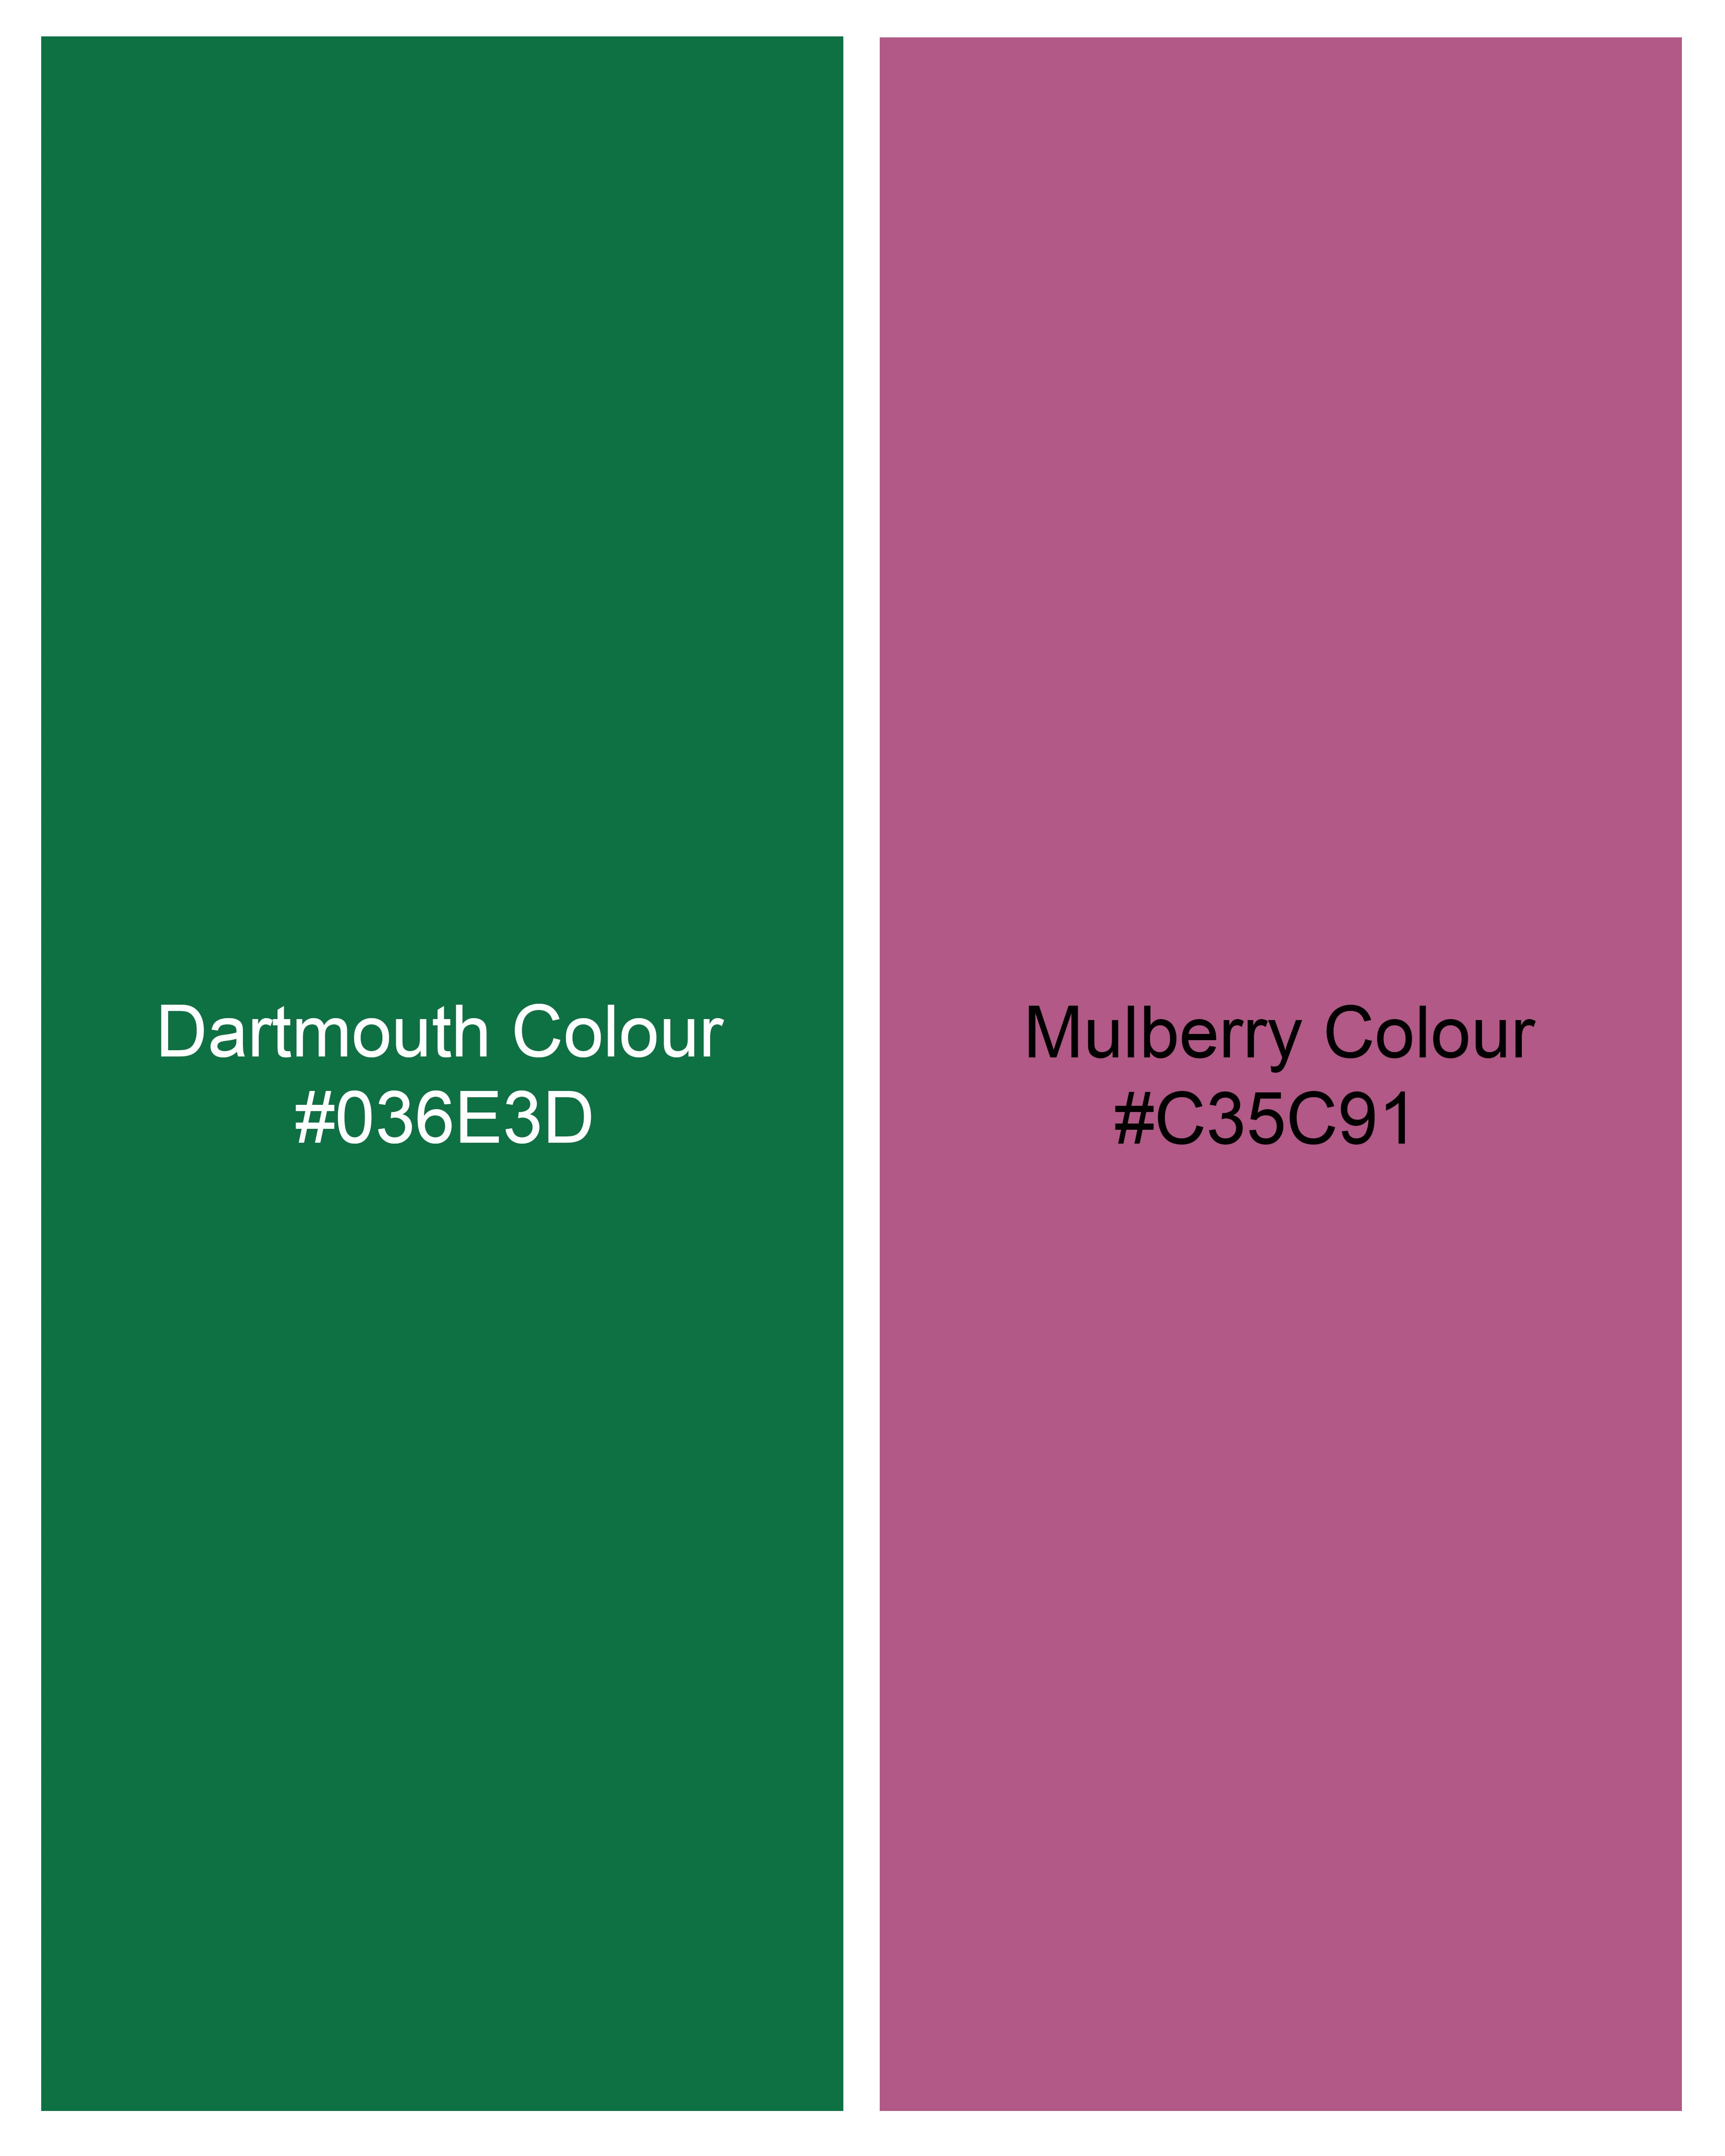 Dartmouth Green with Mulberry Pink Ditsy Textured Bandhgala Designer Blazer BL2444-BG-D255-36,BL2444-BG-D255-38,BL2444-BG-D255-40,BL2444-BG-D255-42,BL2444-BG-D255-44,BL2444-BG-D255-46,BL2444-BG-D255-48,BL2444-BG-D255-50,BL2444-BG-D255-52,BL2444-BG-D255-54,BL2444-BG-D255-56,BL2444-BG-D255-58,BL2444-BG-D255-60